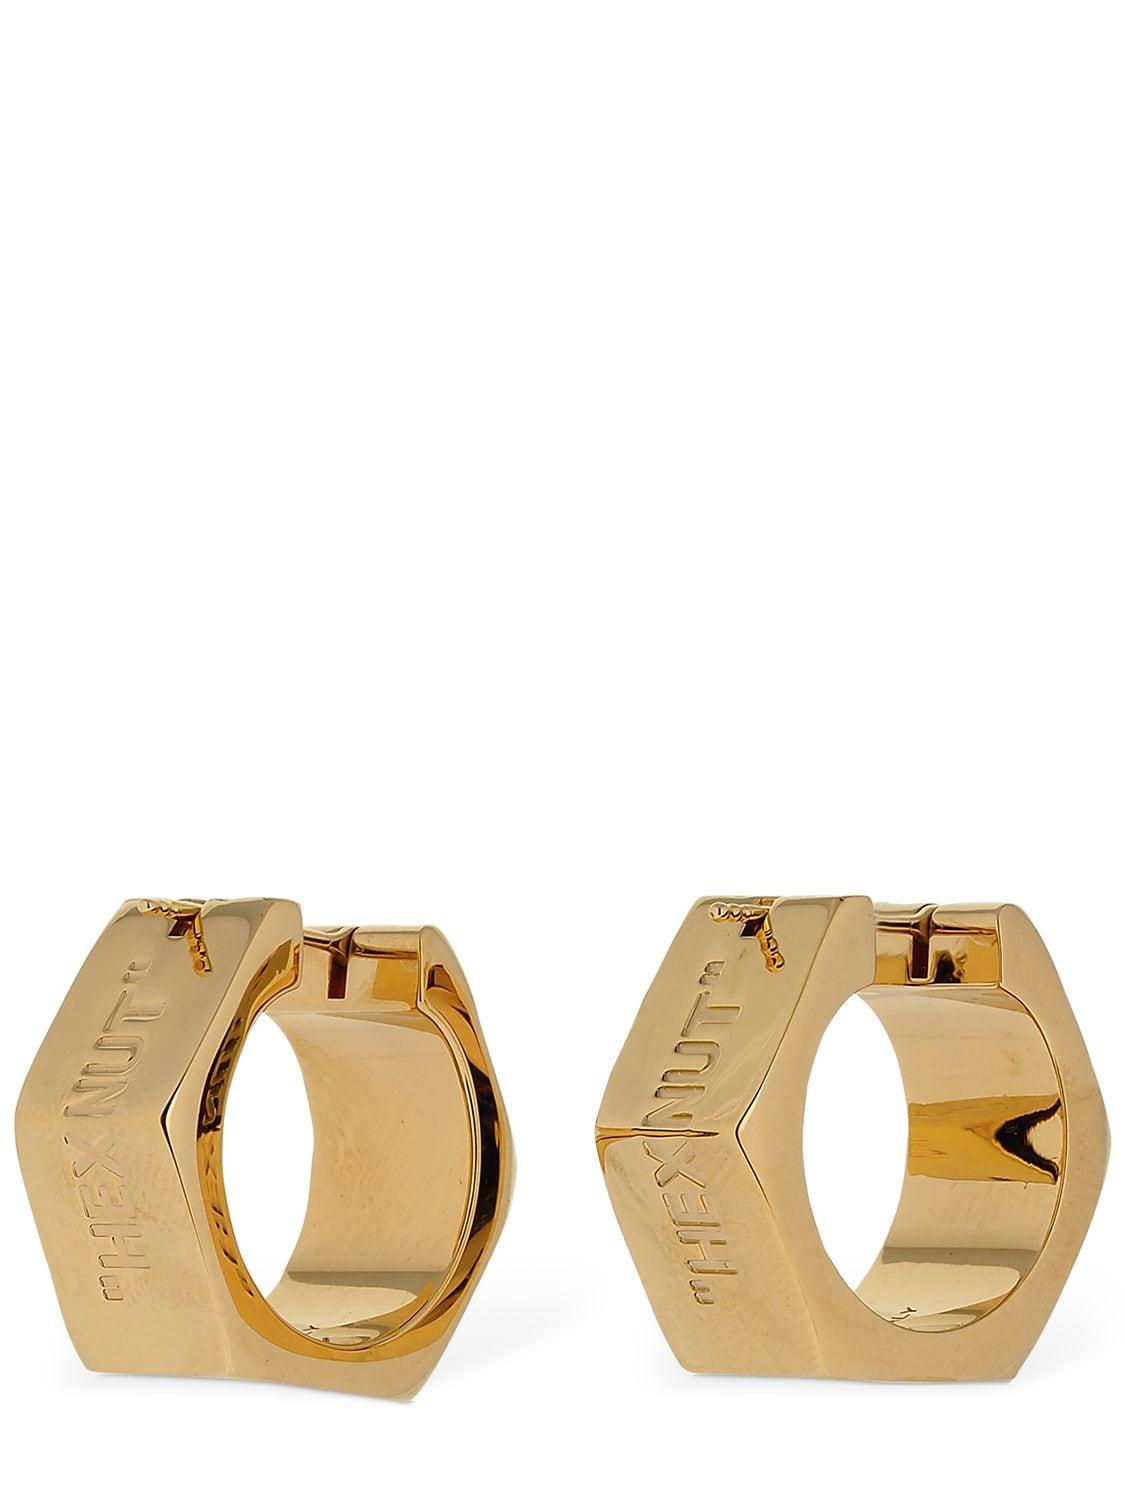 Off-White c/o Virgil Abloh Hexnut Hoop Earrings in Gold (Metallic) - Lyst